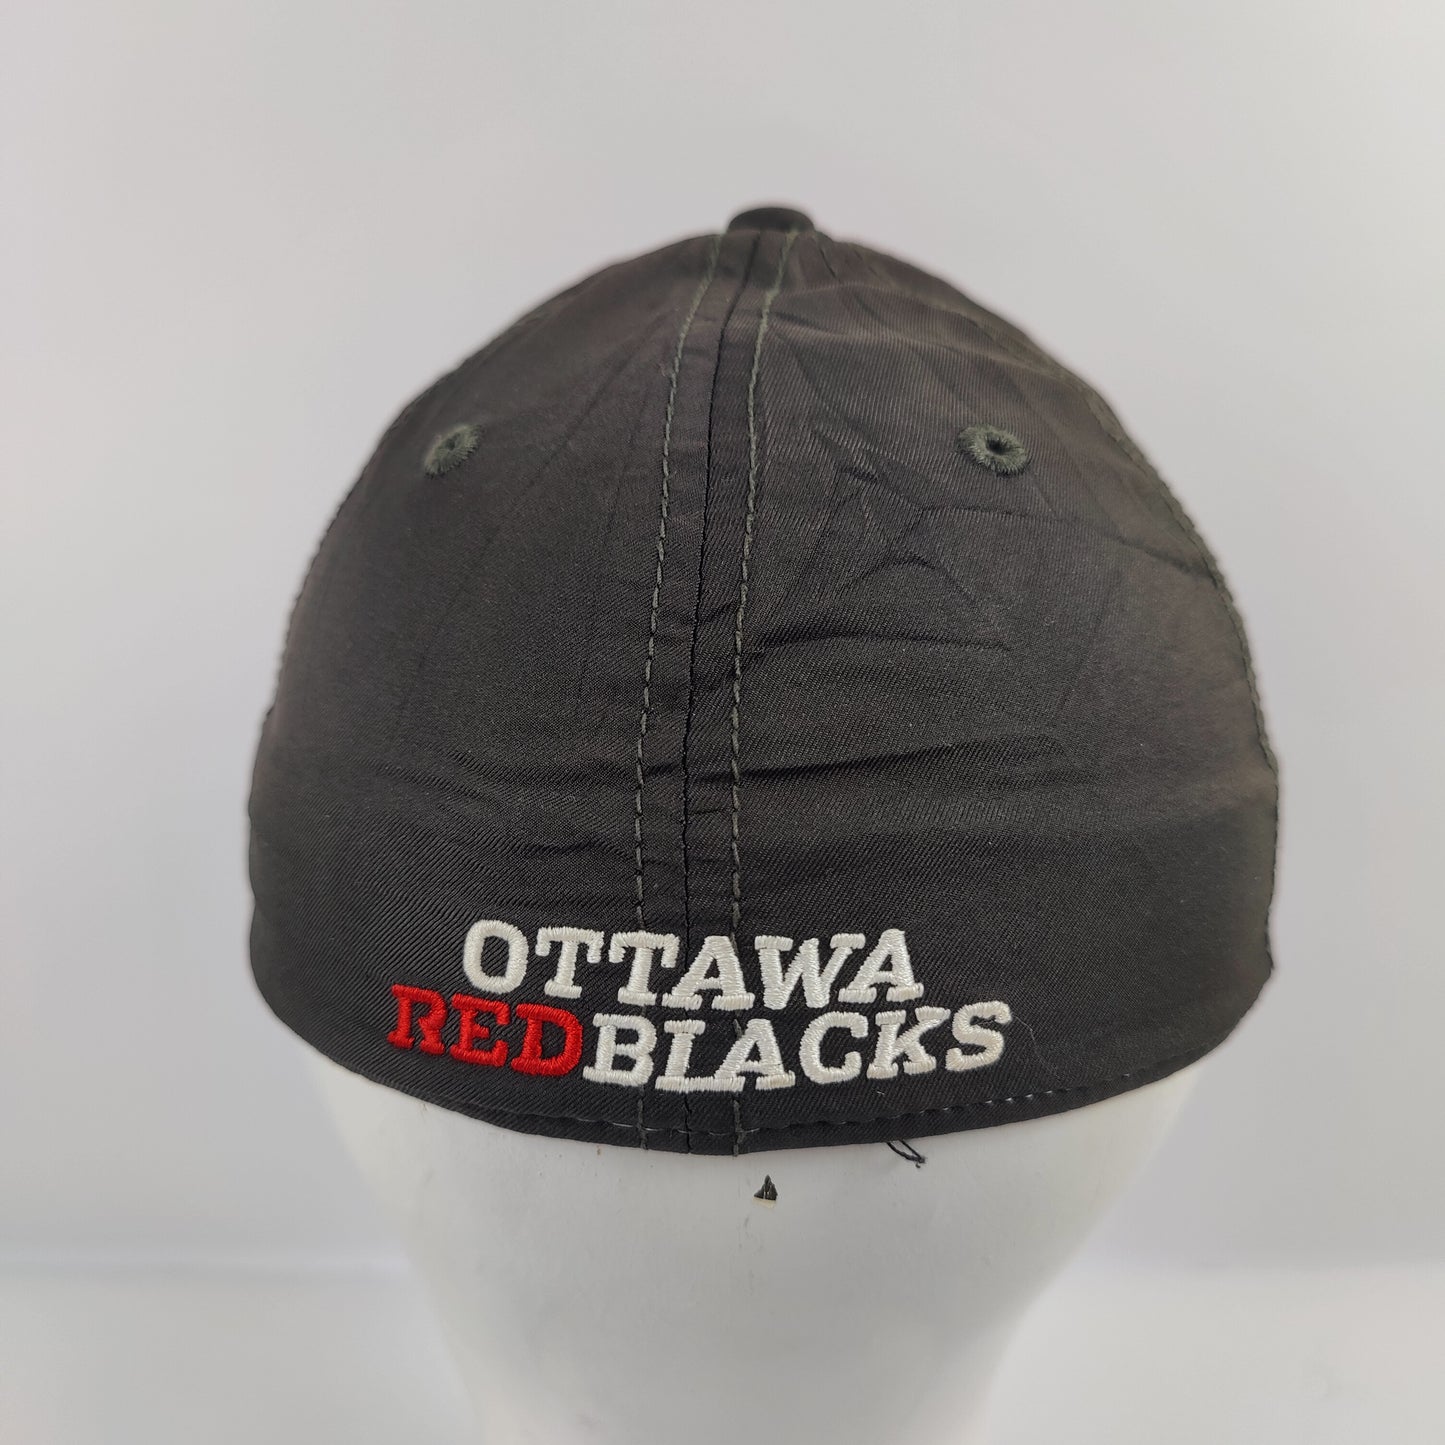 Adidas Ottawa Red Blacks Baseball Cap - Black - 1080